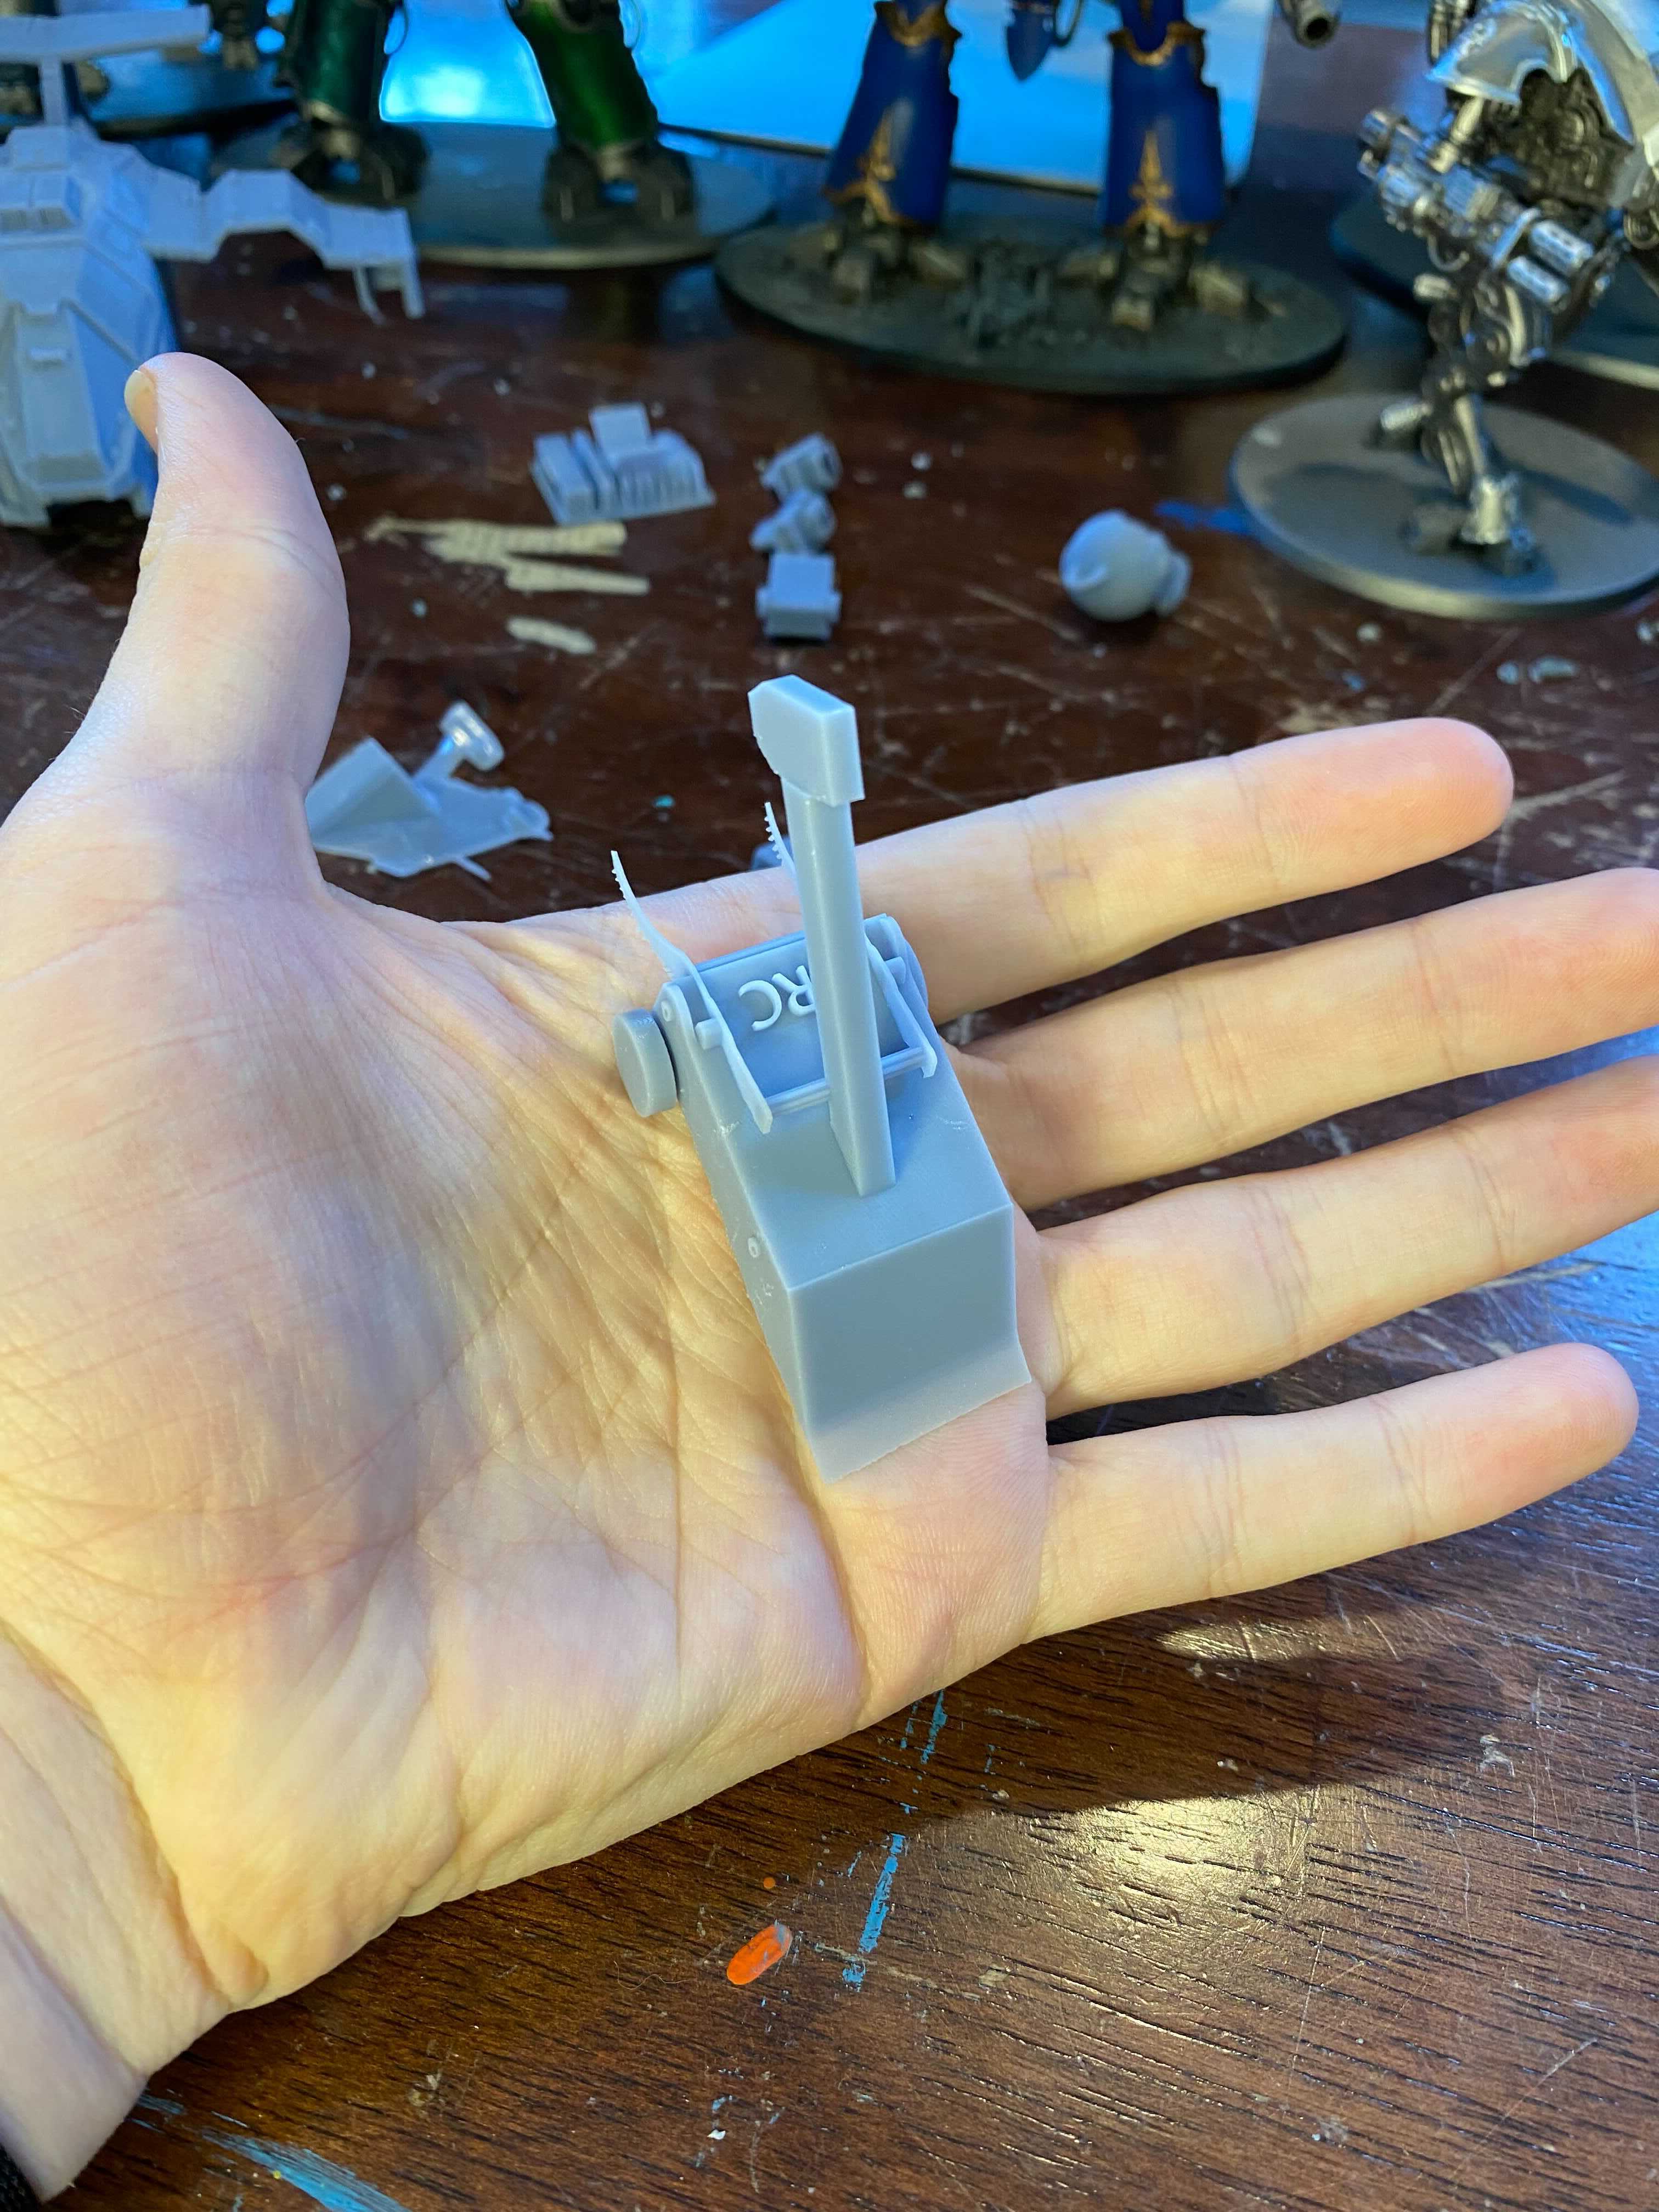 Mini manny, a 3D-printed figure